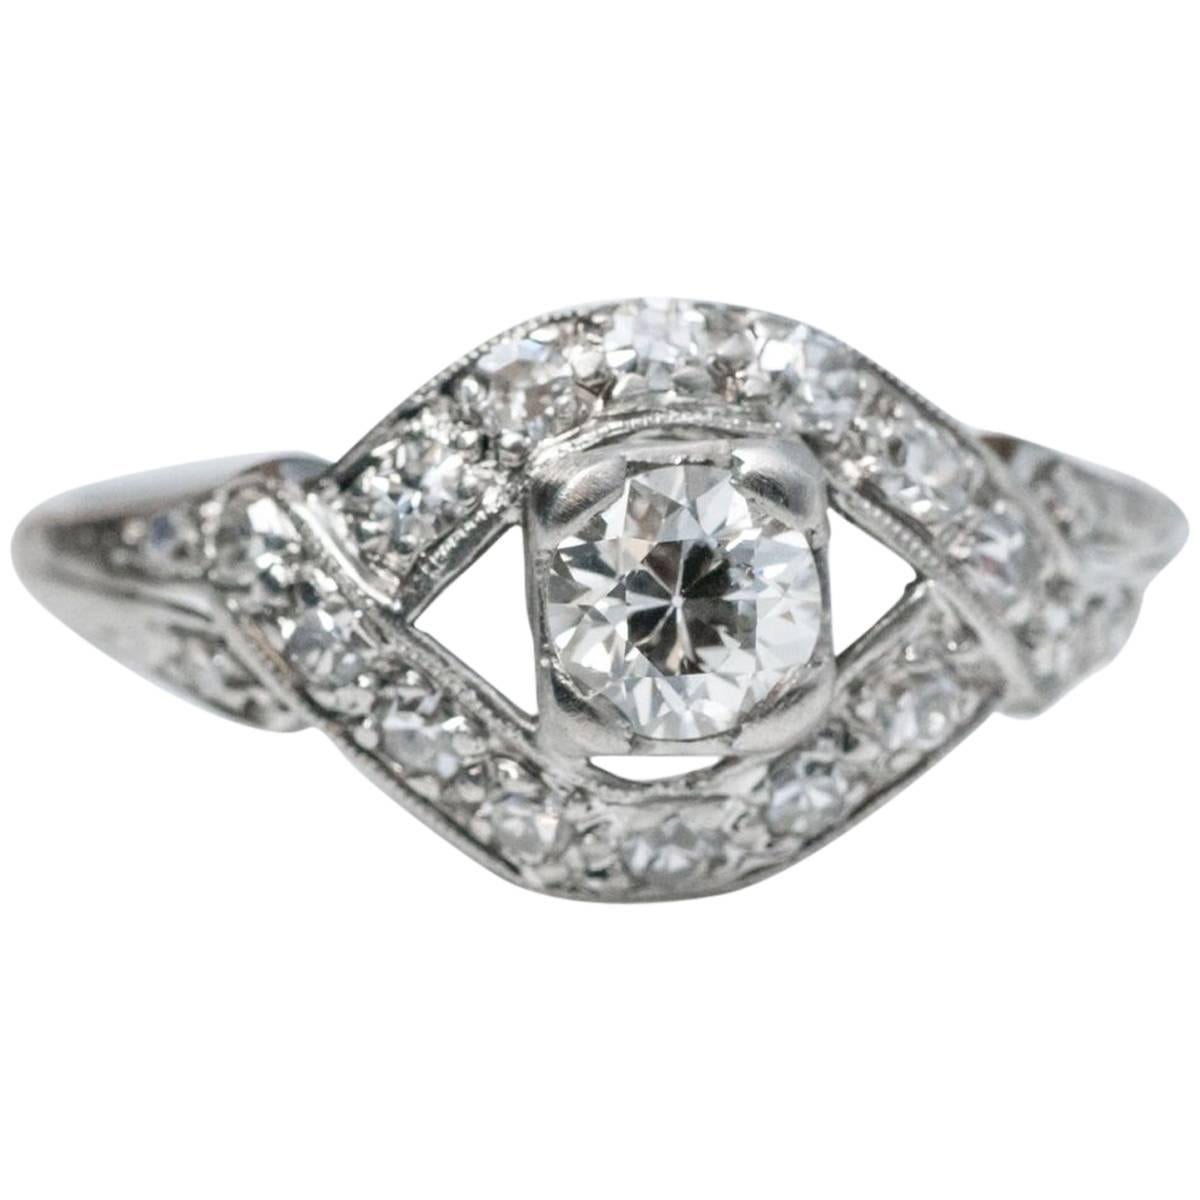 1920s Art Deco GIA .34 Carat Diamond Engagement Ring